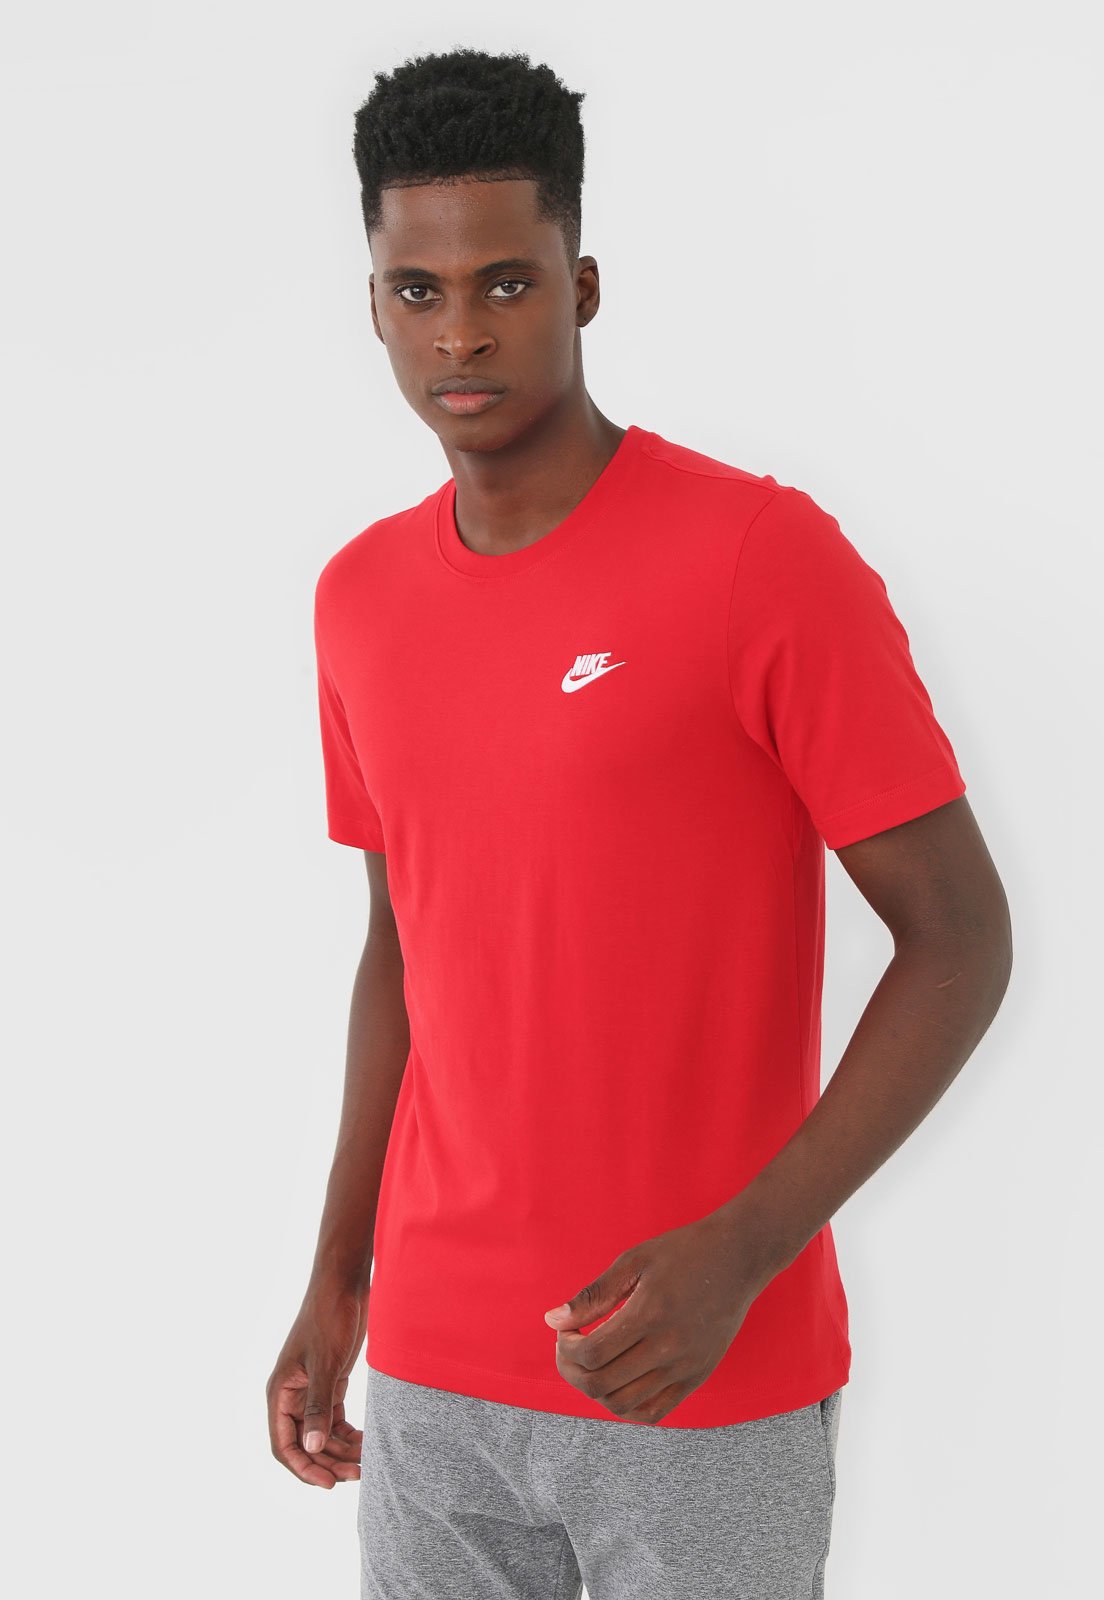 Parpadeo Creo que estoy enfermo Devastar Camiseta Nike Sportswear Nsw Club Vermelha - Compre Agora | Dafiti Brasil